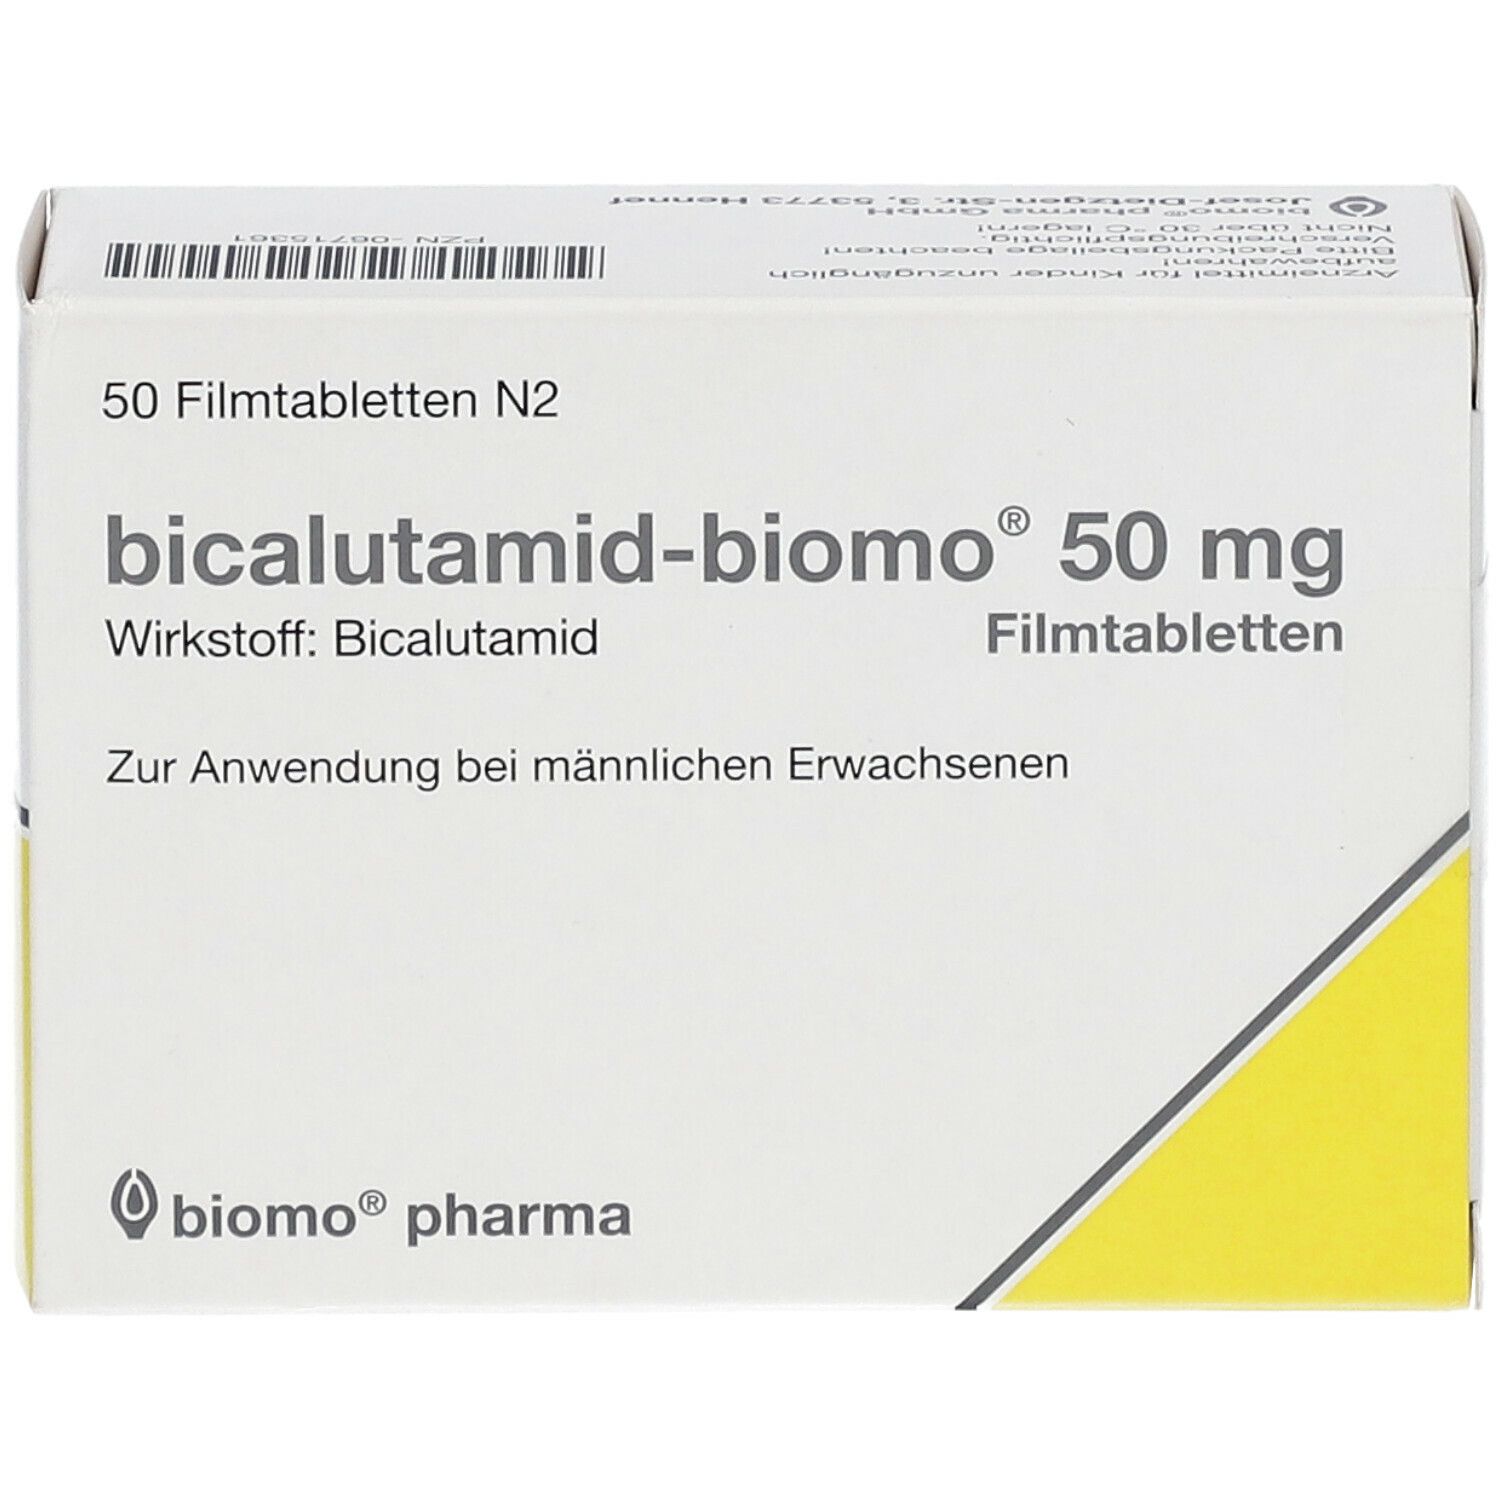 bicalutamid-biomo® 50 mg